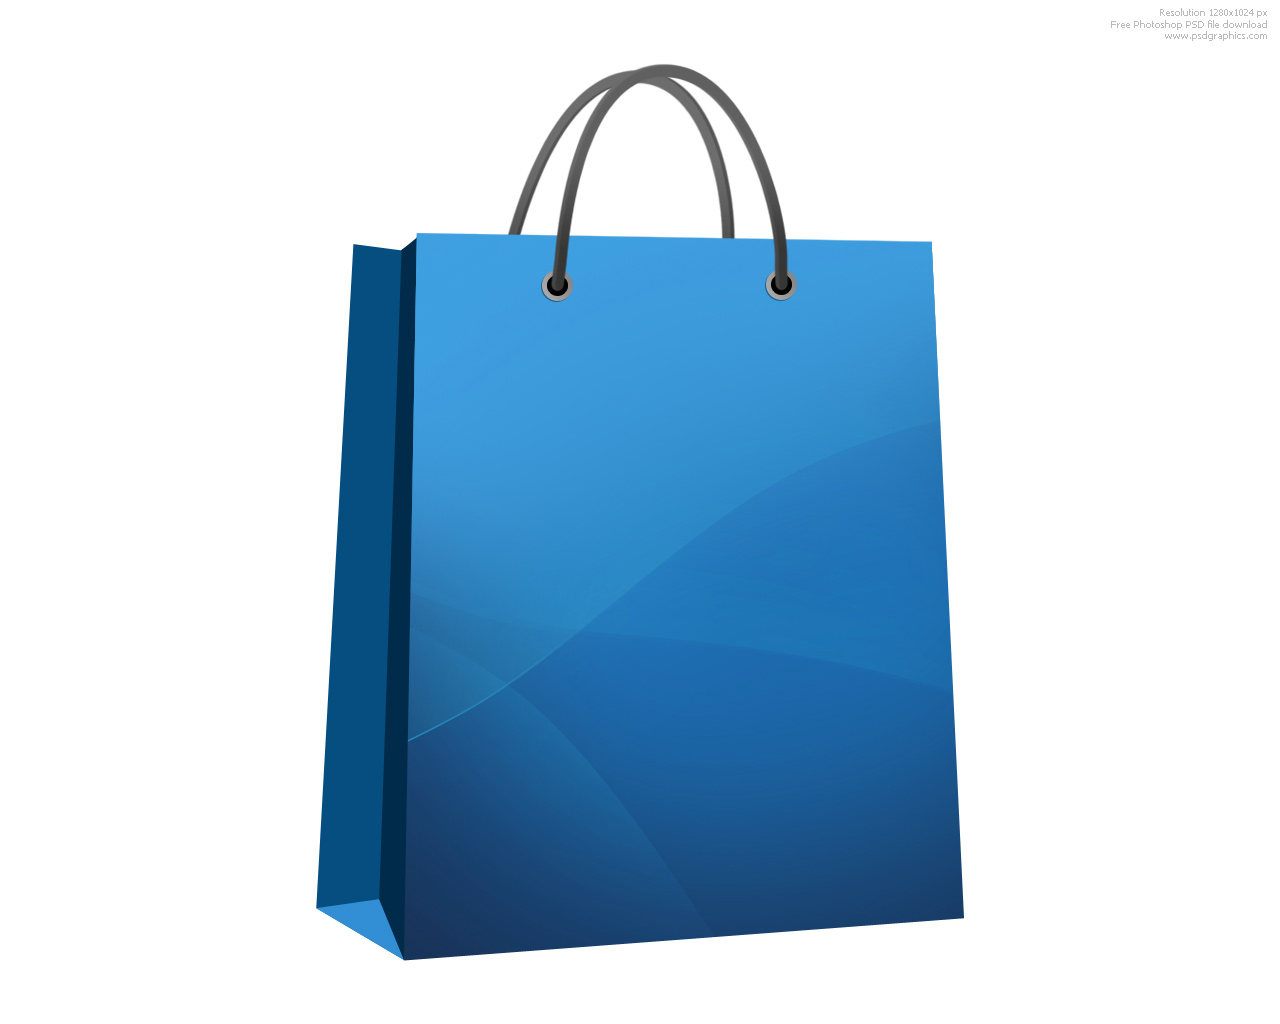 Shopping bags shopping bag clipart 5 - WikiClipArt